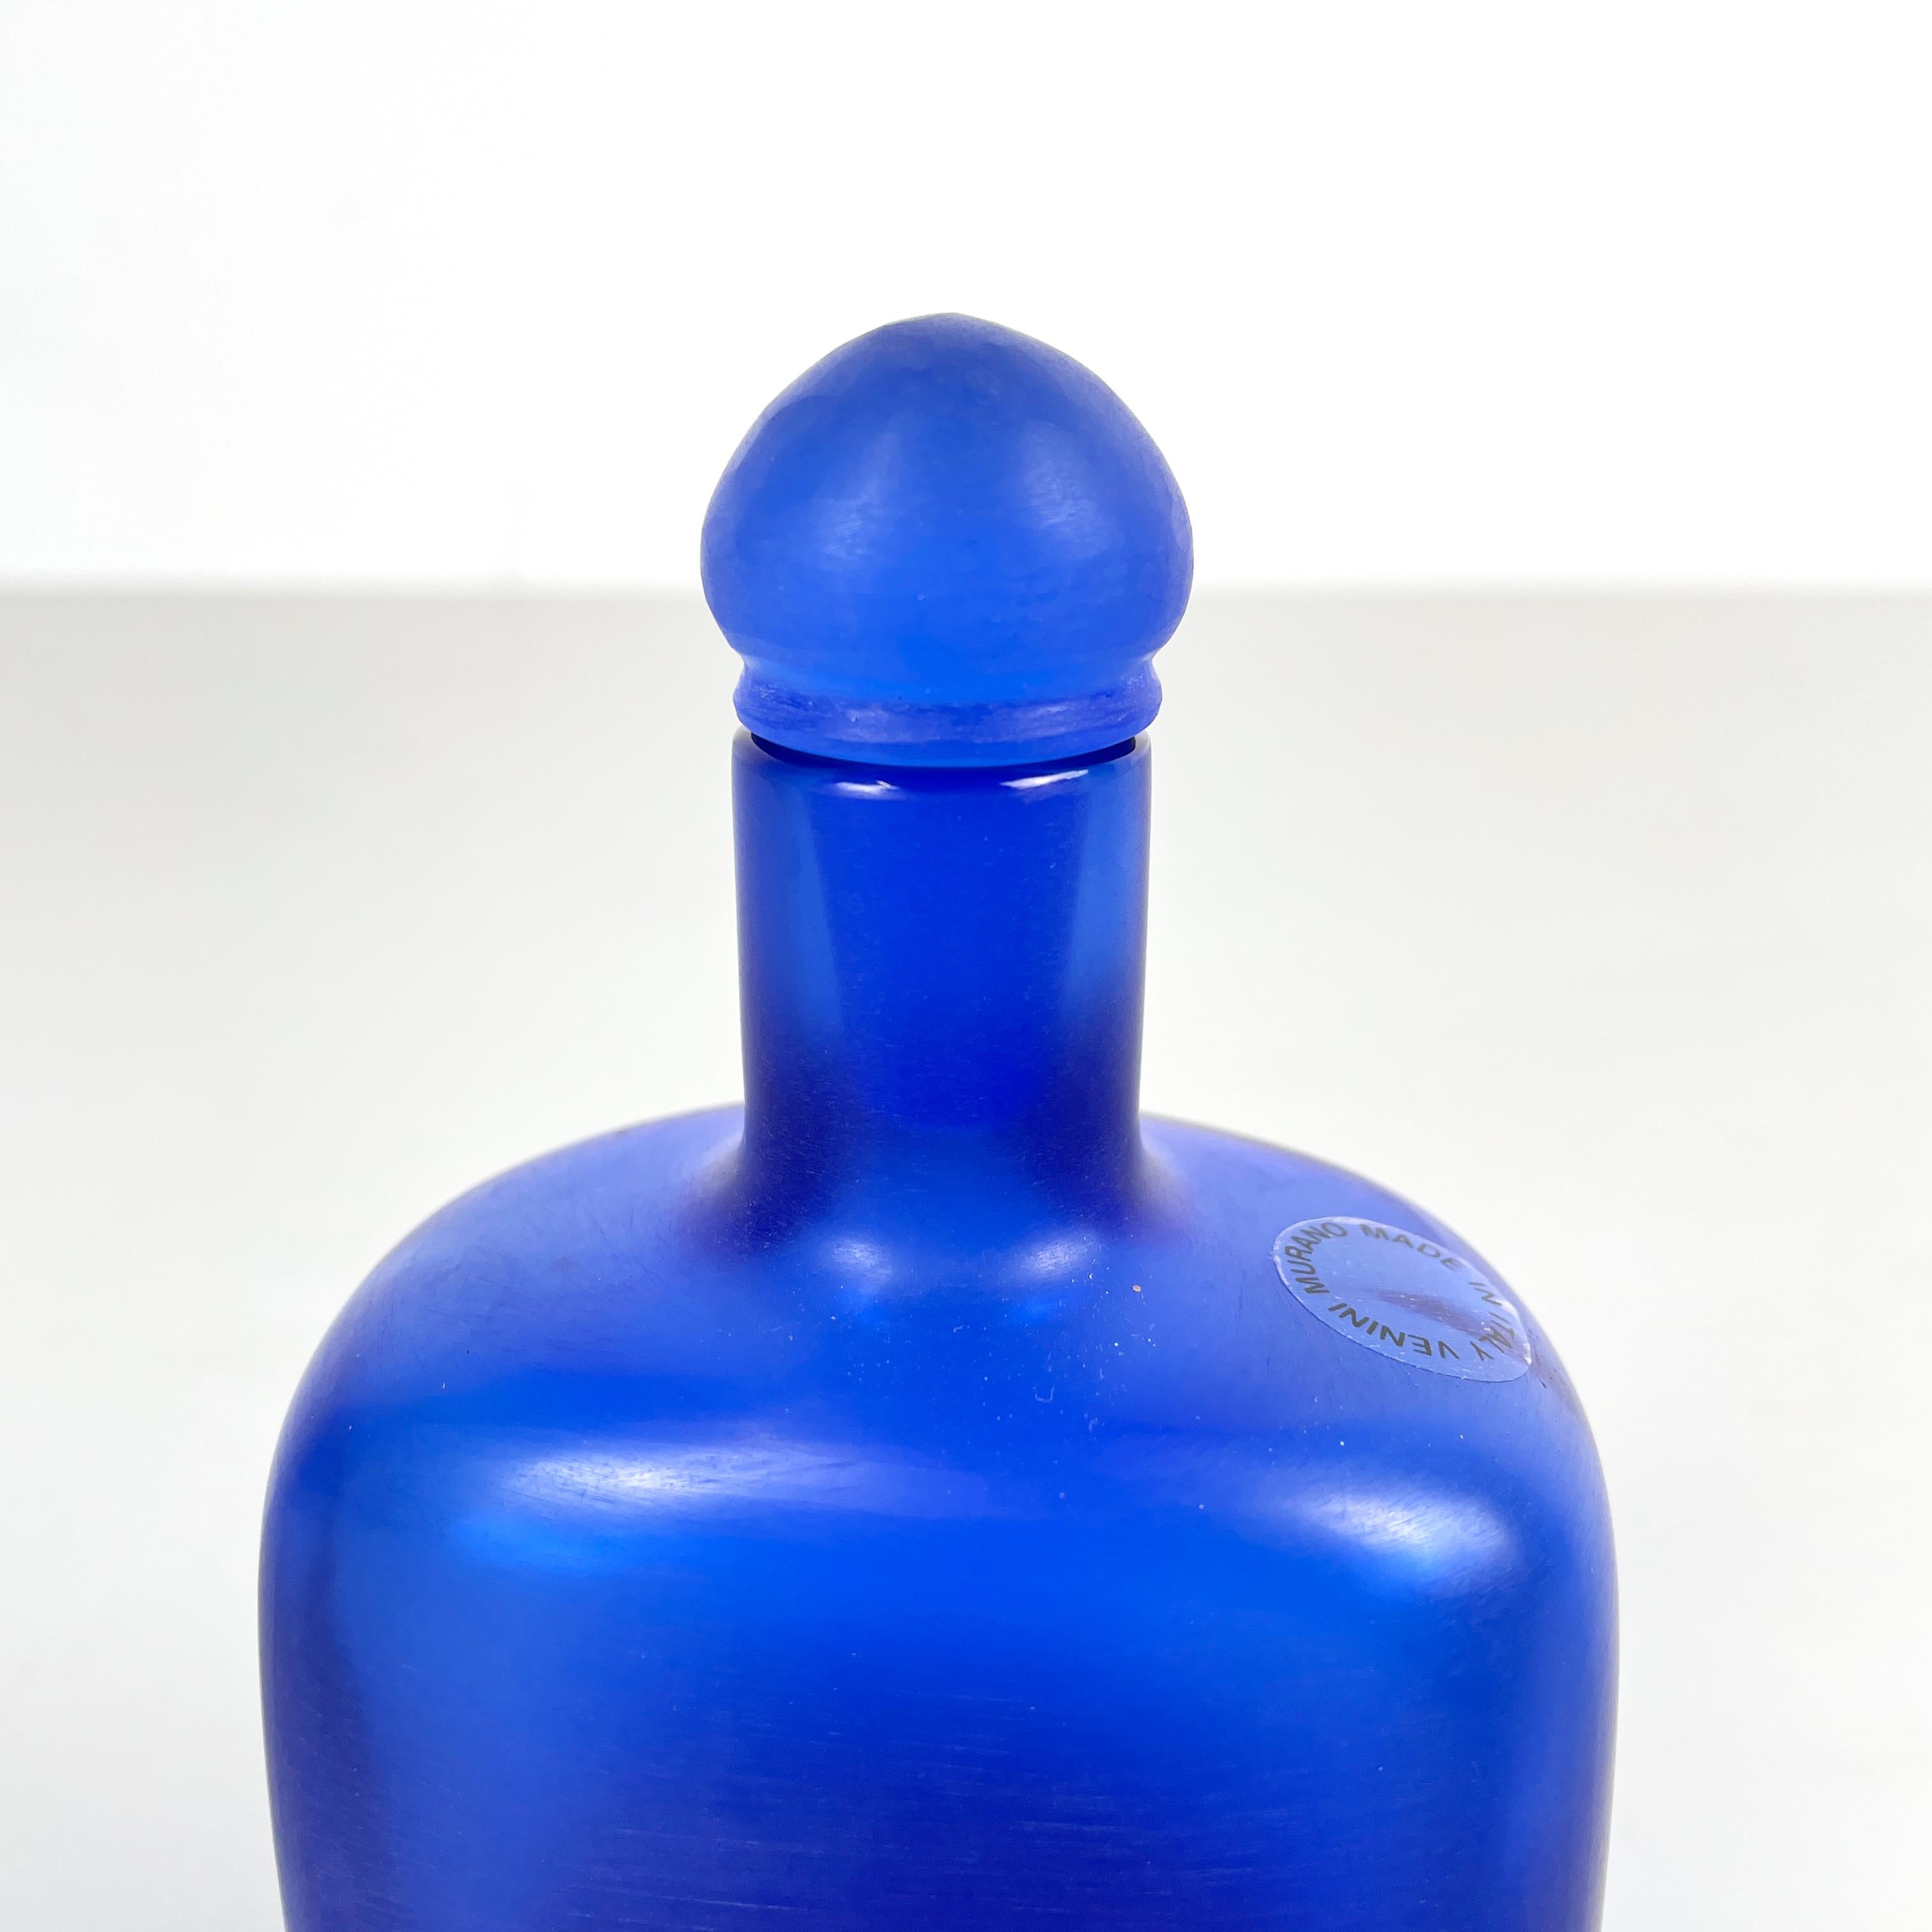 Murano Glass Italian modern Decorative bottle with cap in blue Murano glass by Venini, 1990s